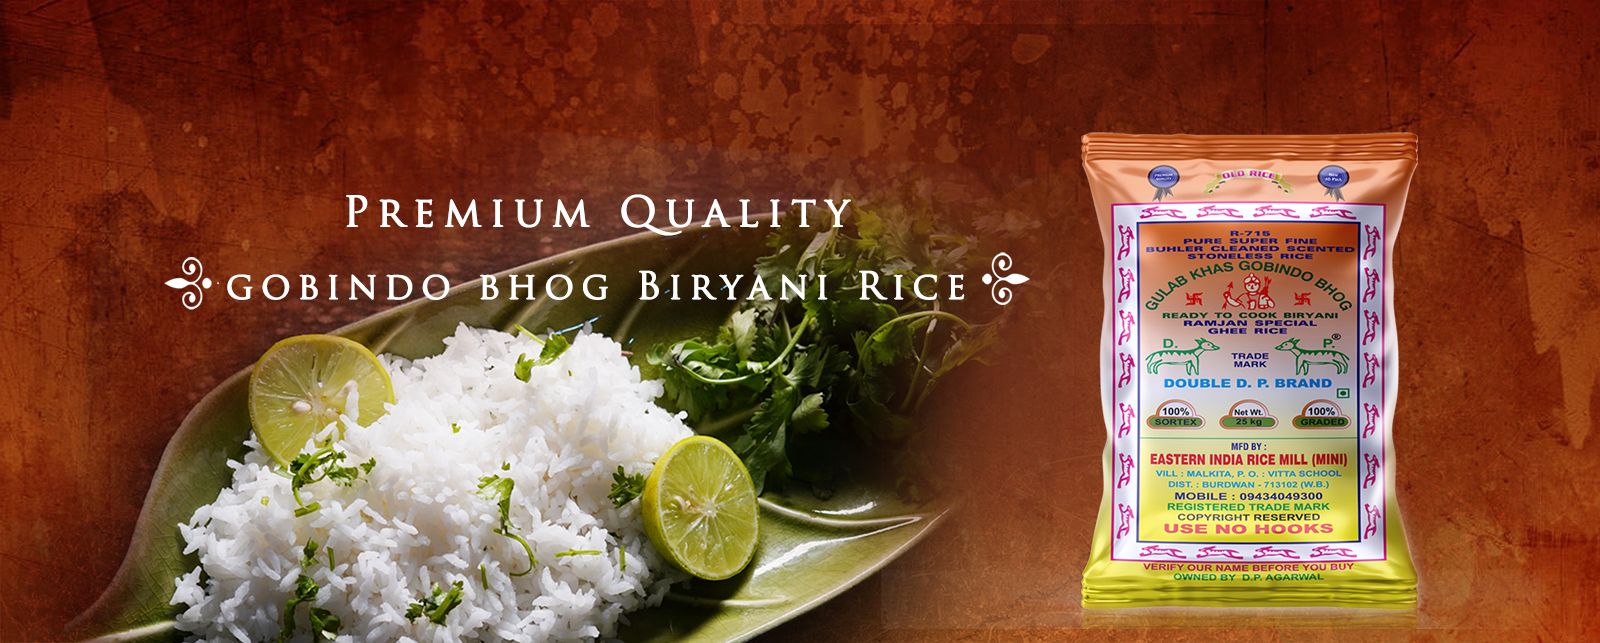 gobindo bhog rice in bangalore